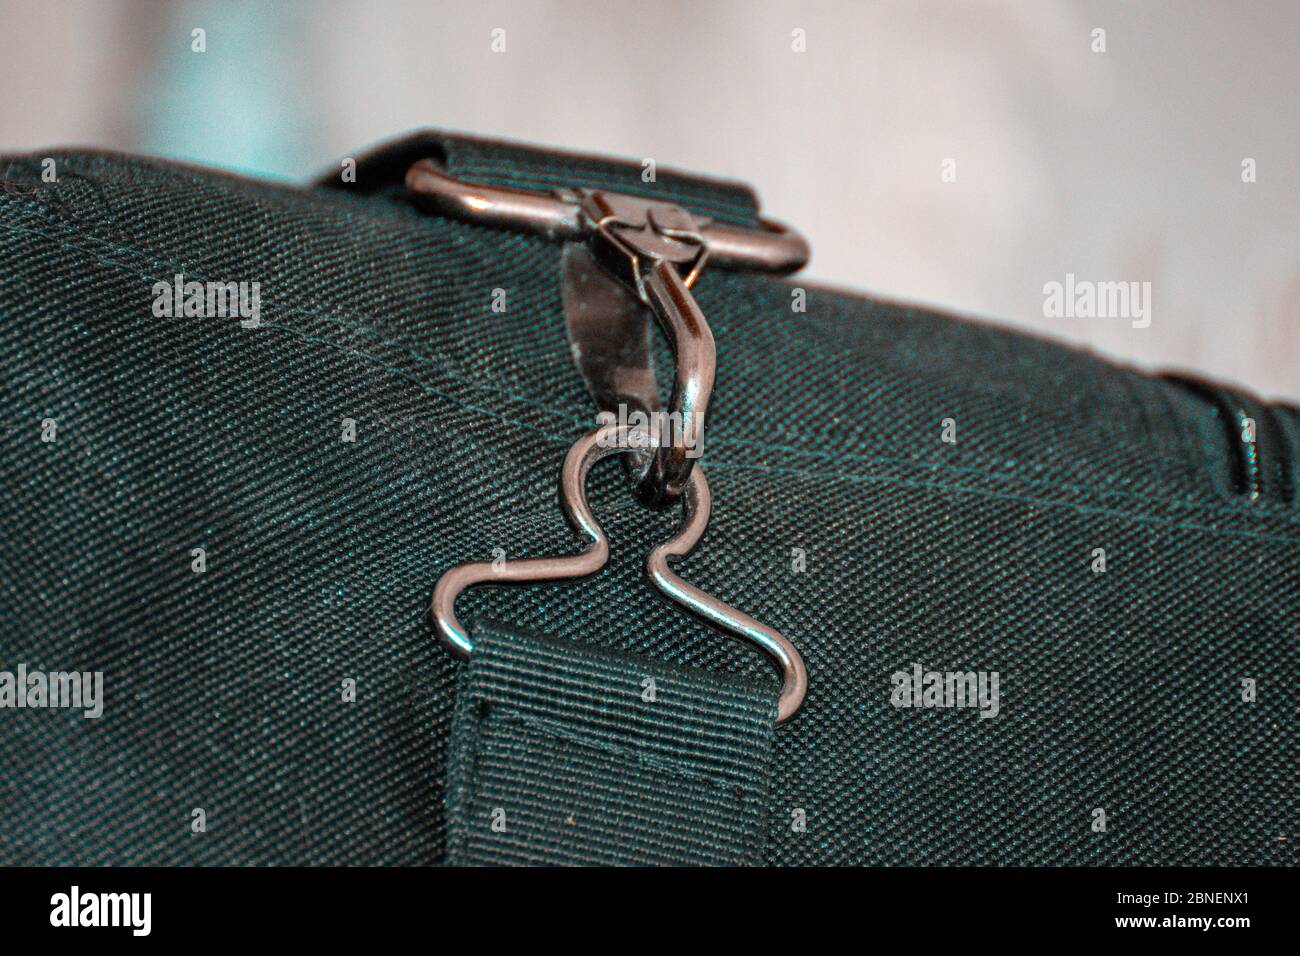 Bag black belt rope strap lanyard, hanging metal clasp snap latch hook carabiner closeup. Stock Photo